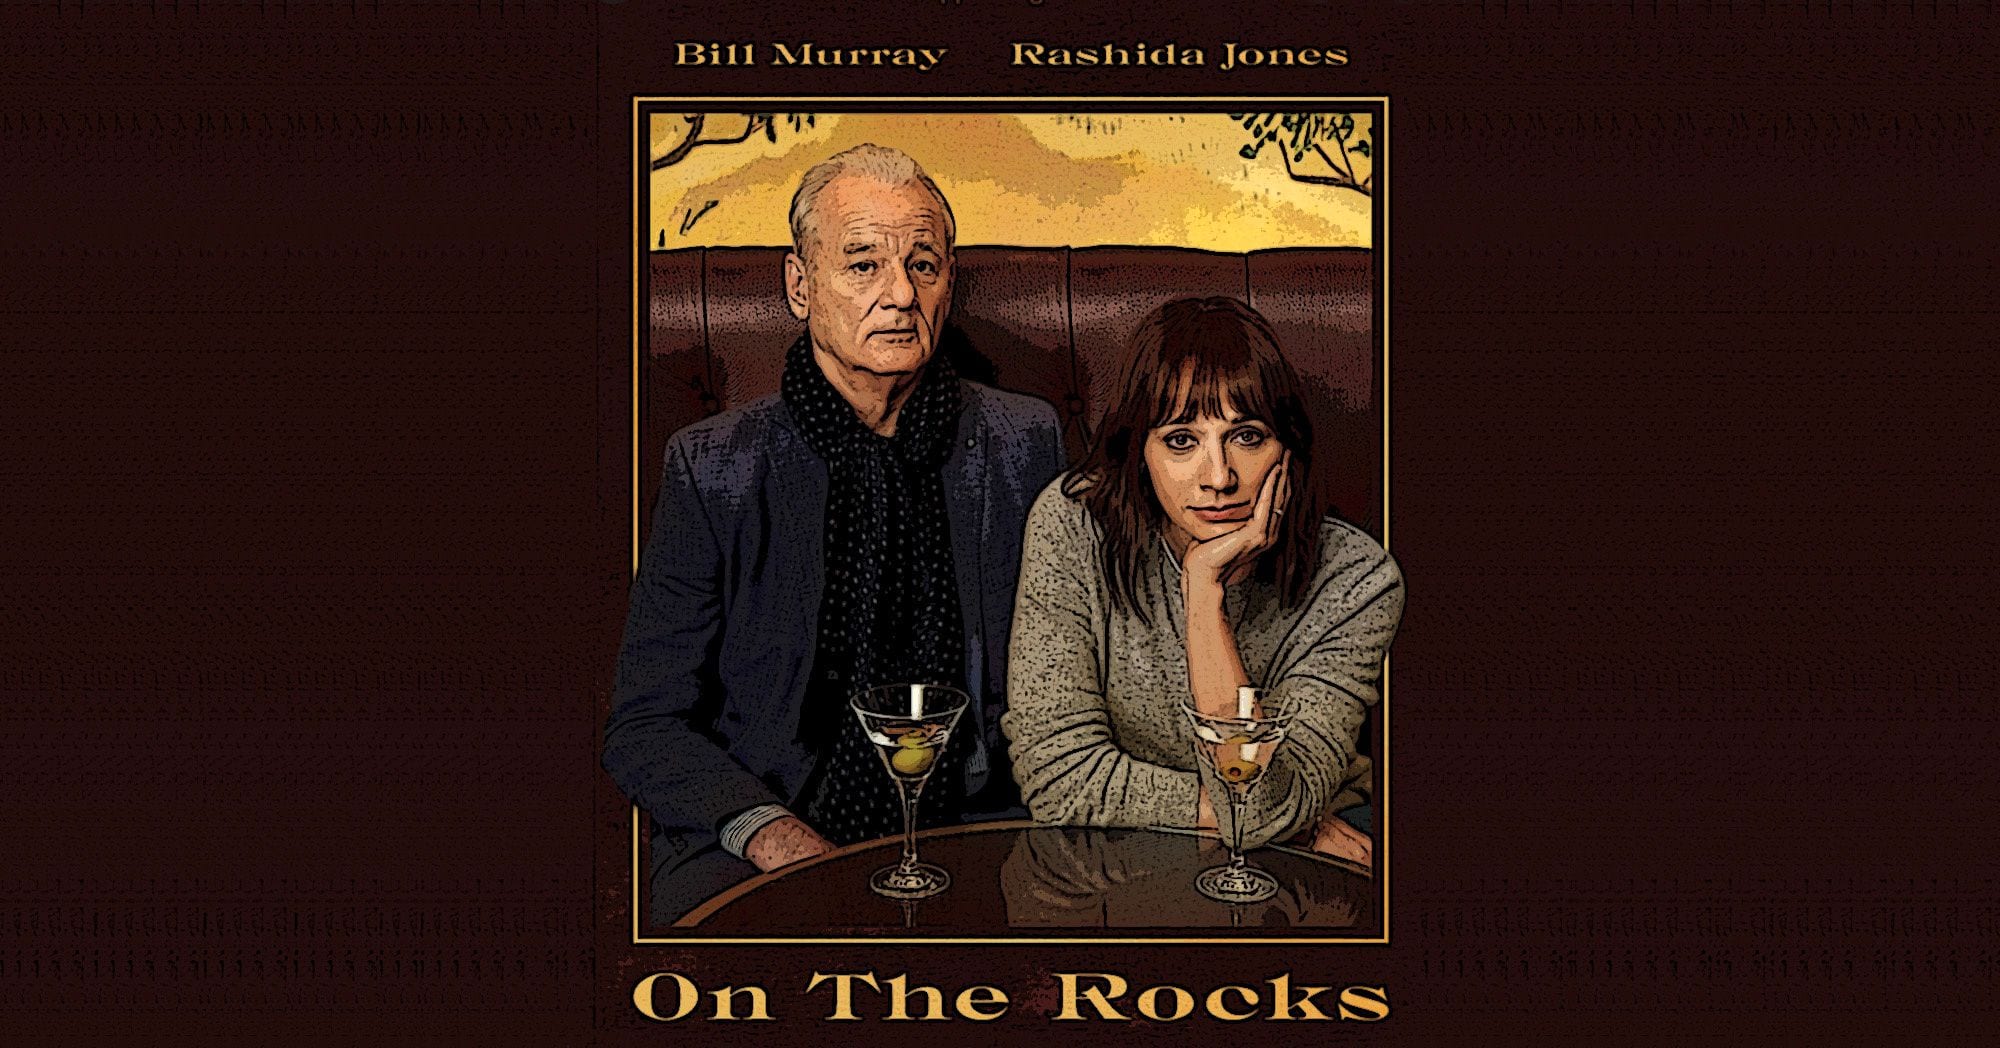 Bill Murray and Rashida Jones Add Another Shot to ‘On the Rocks’